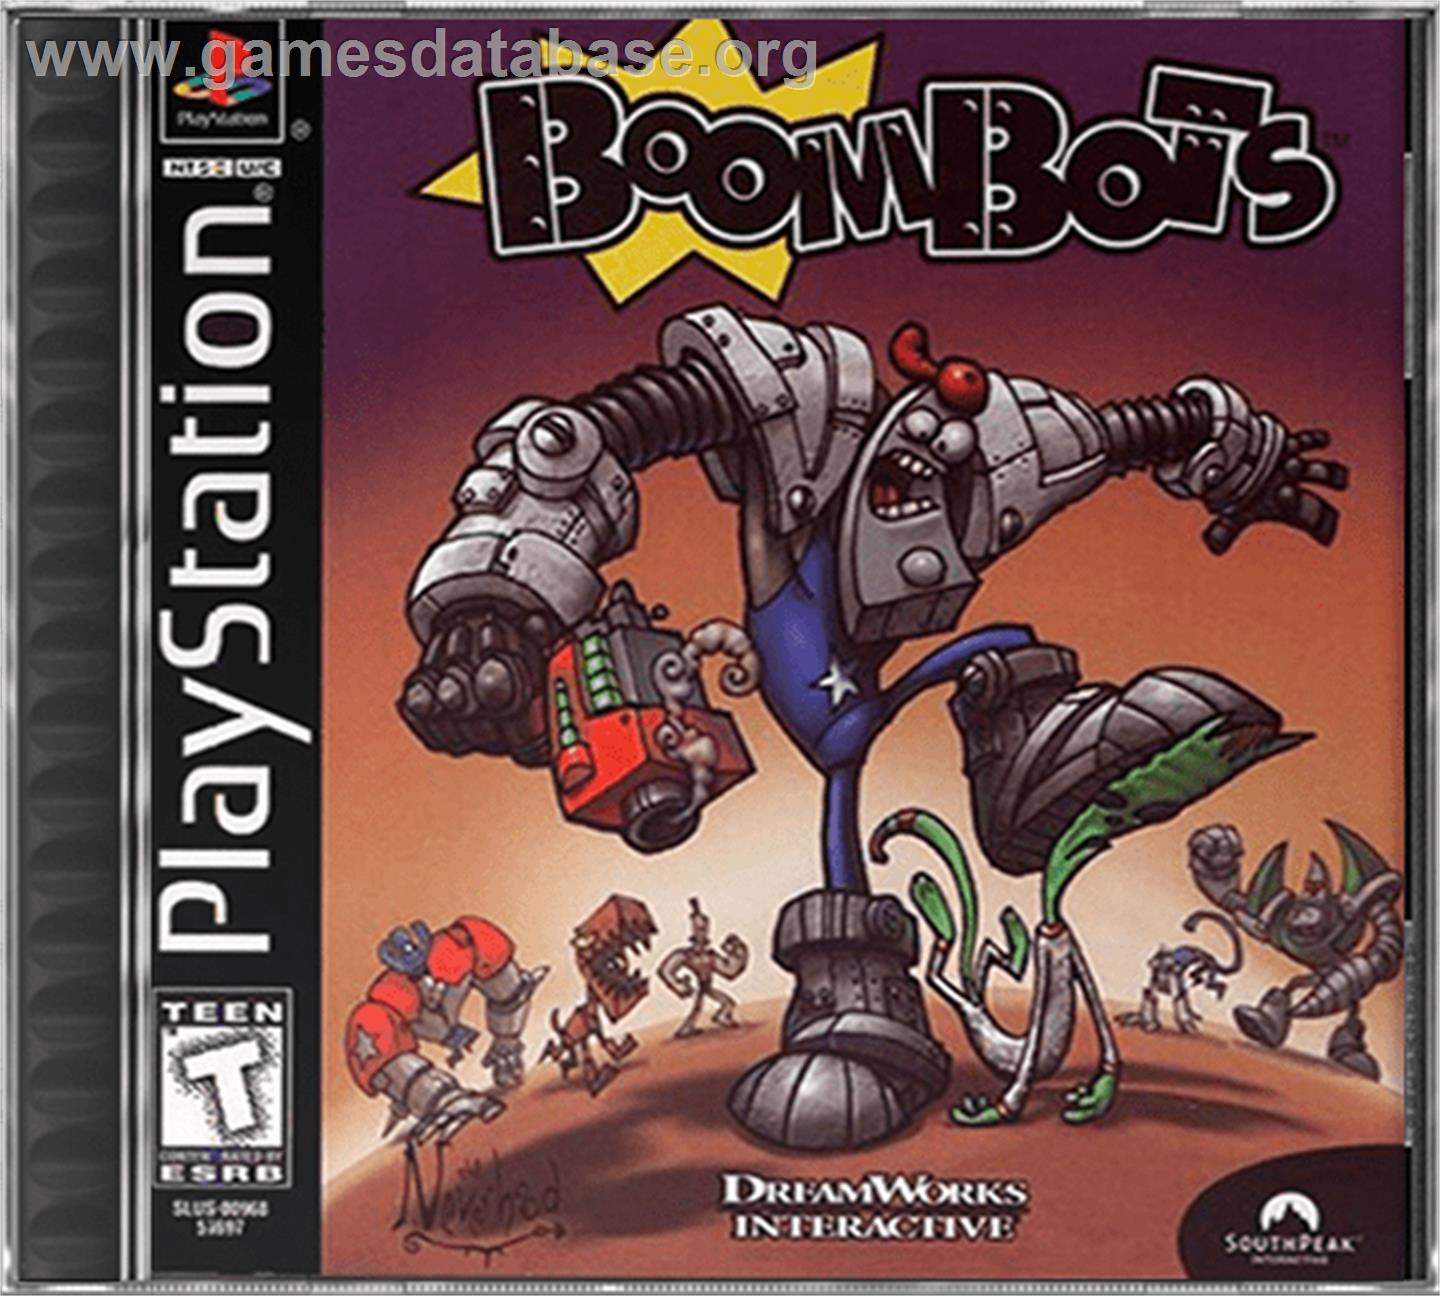 BoomBots - Sony Playstation - Artwork - Box